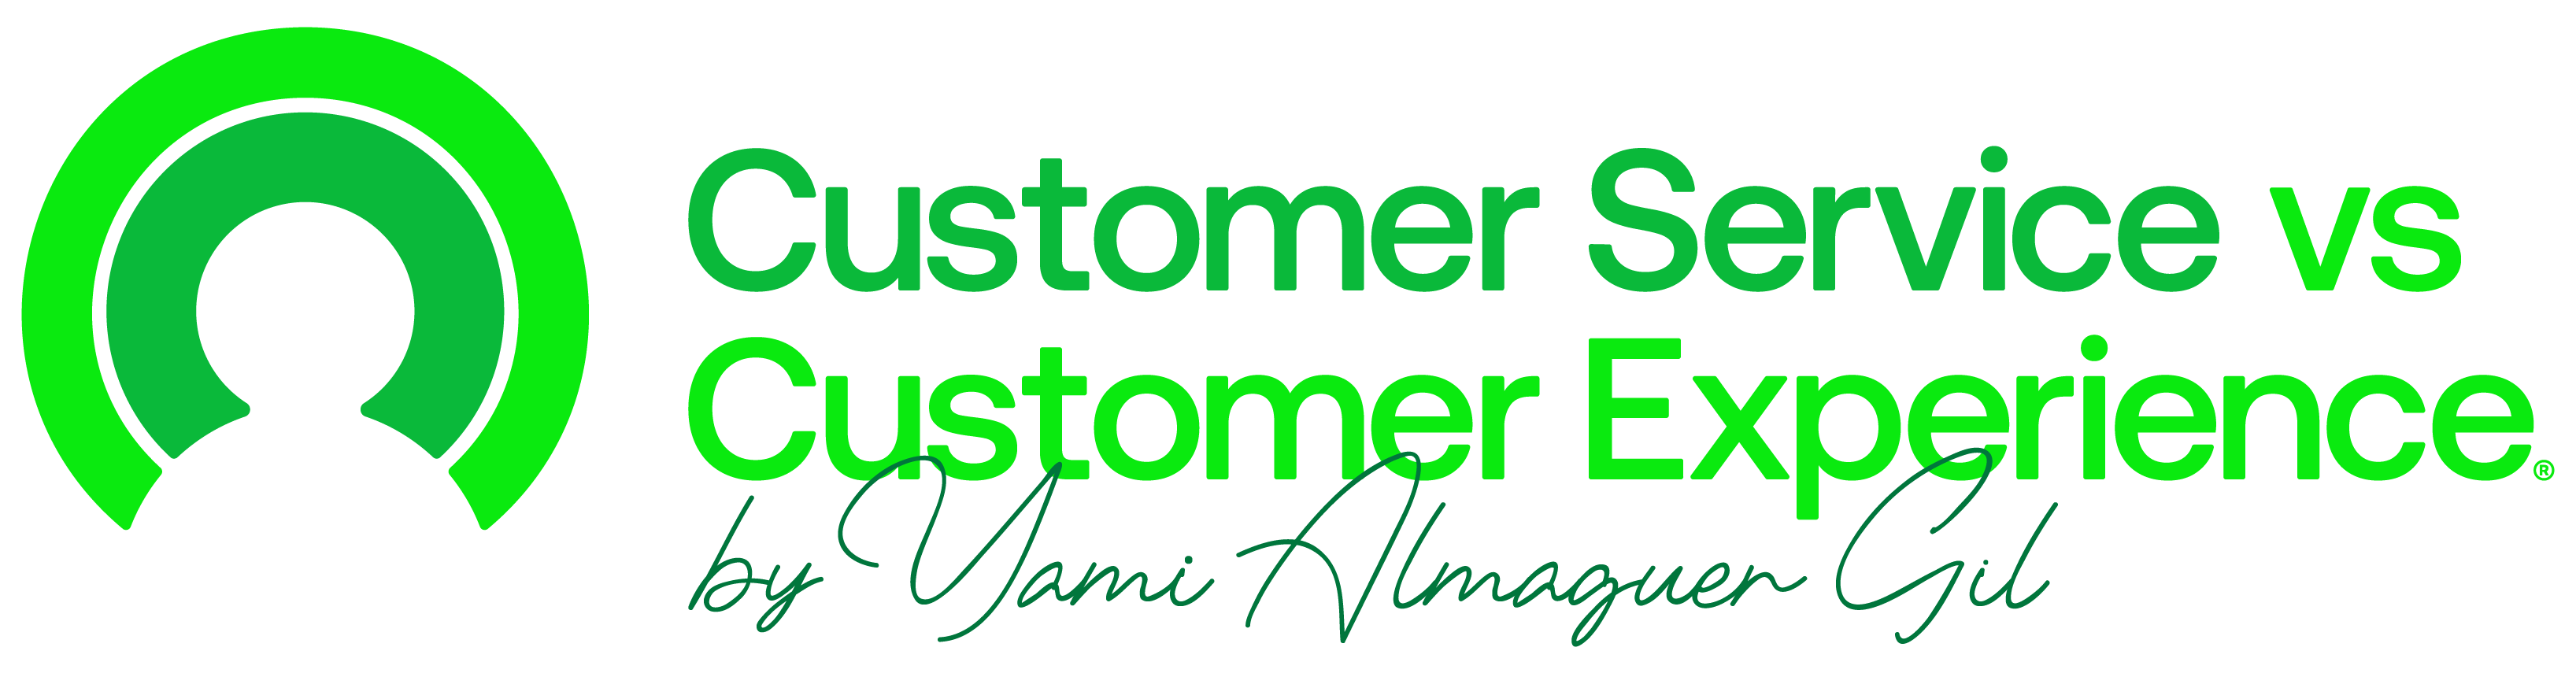 Customer Service v.s Customer Experience